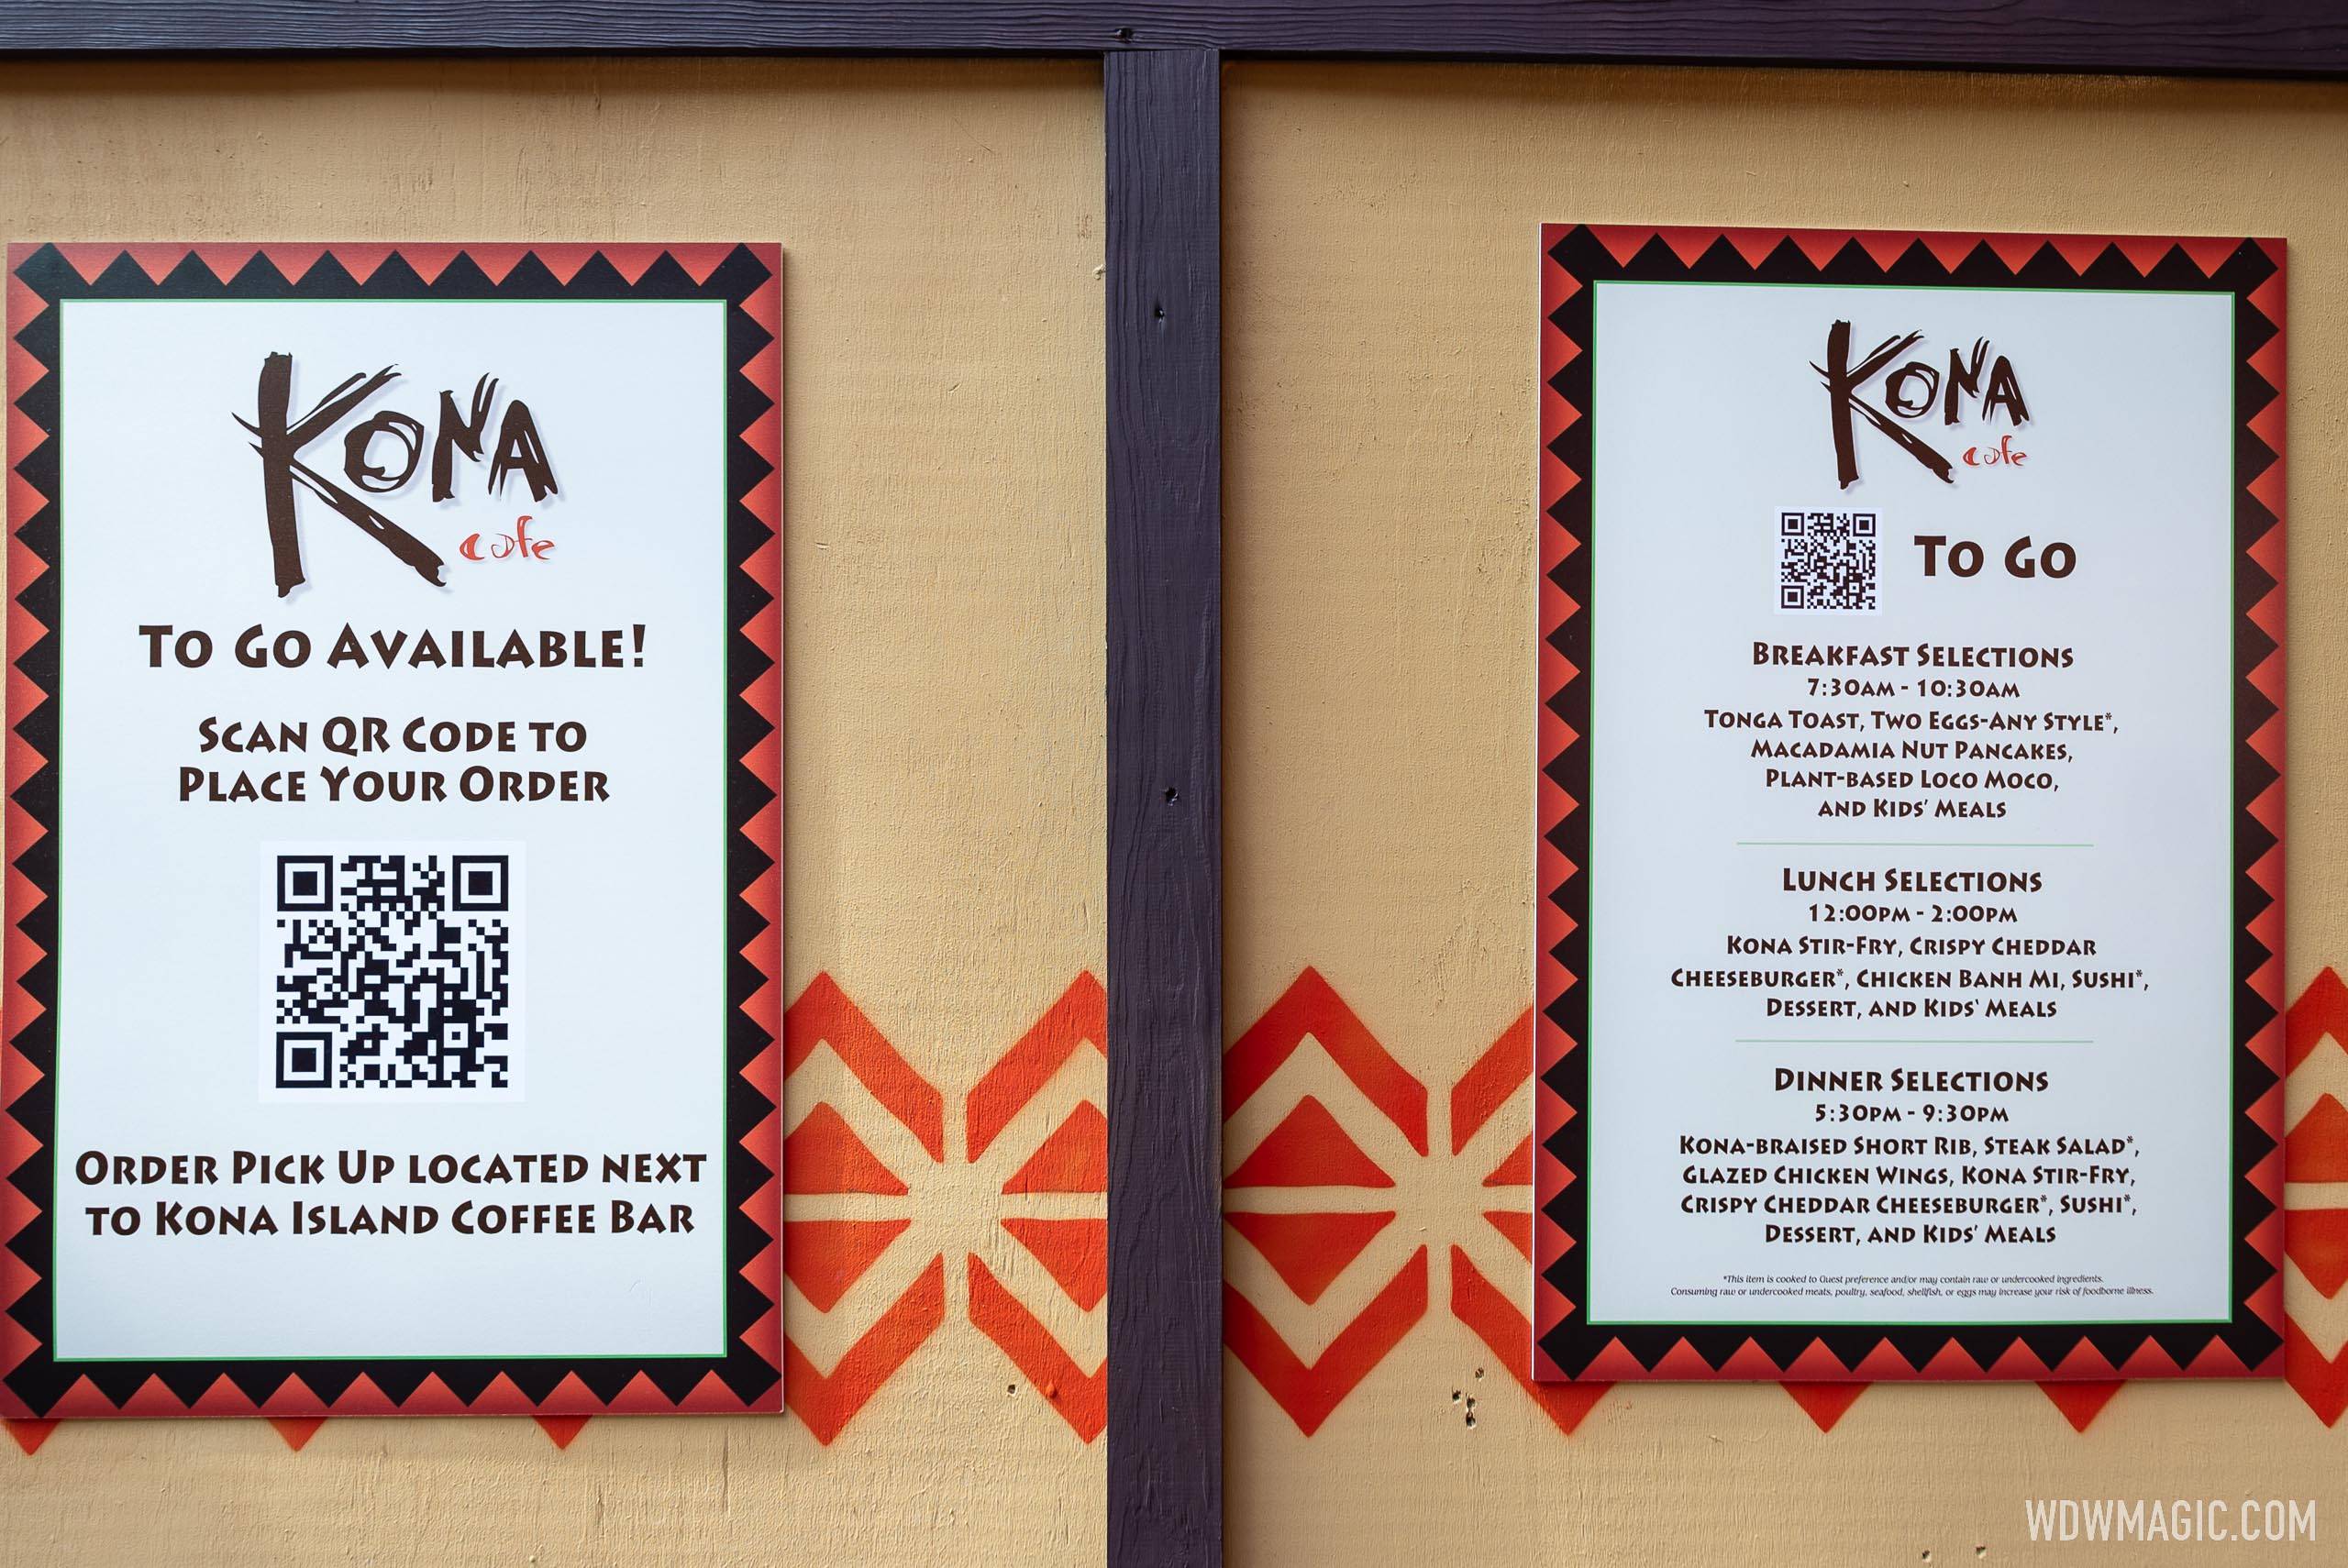 Kona Cafe refurbishment - October 11 2022